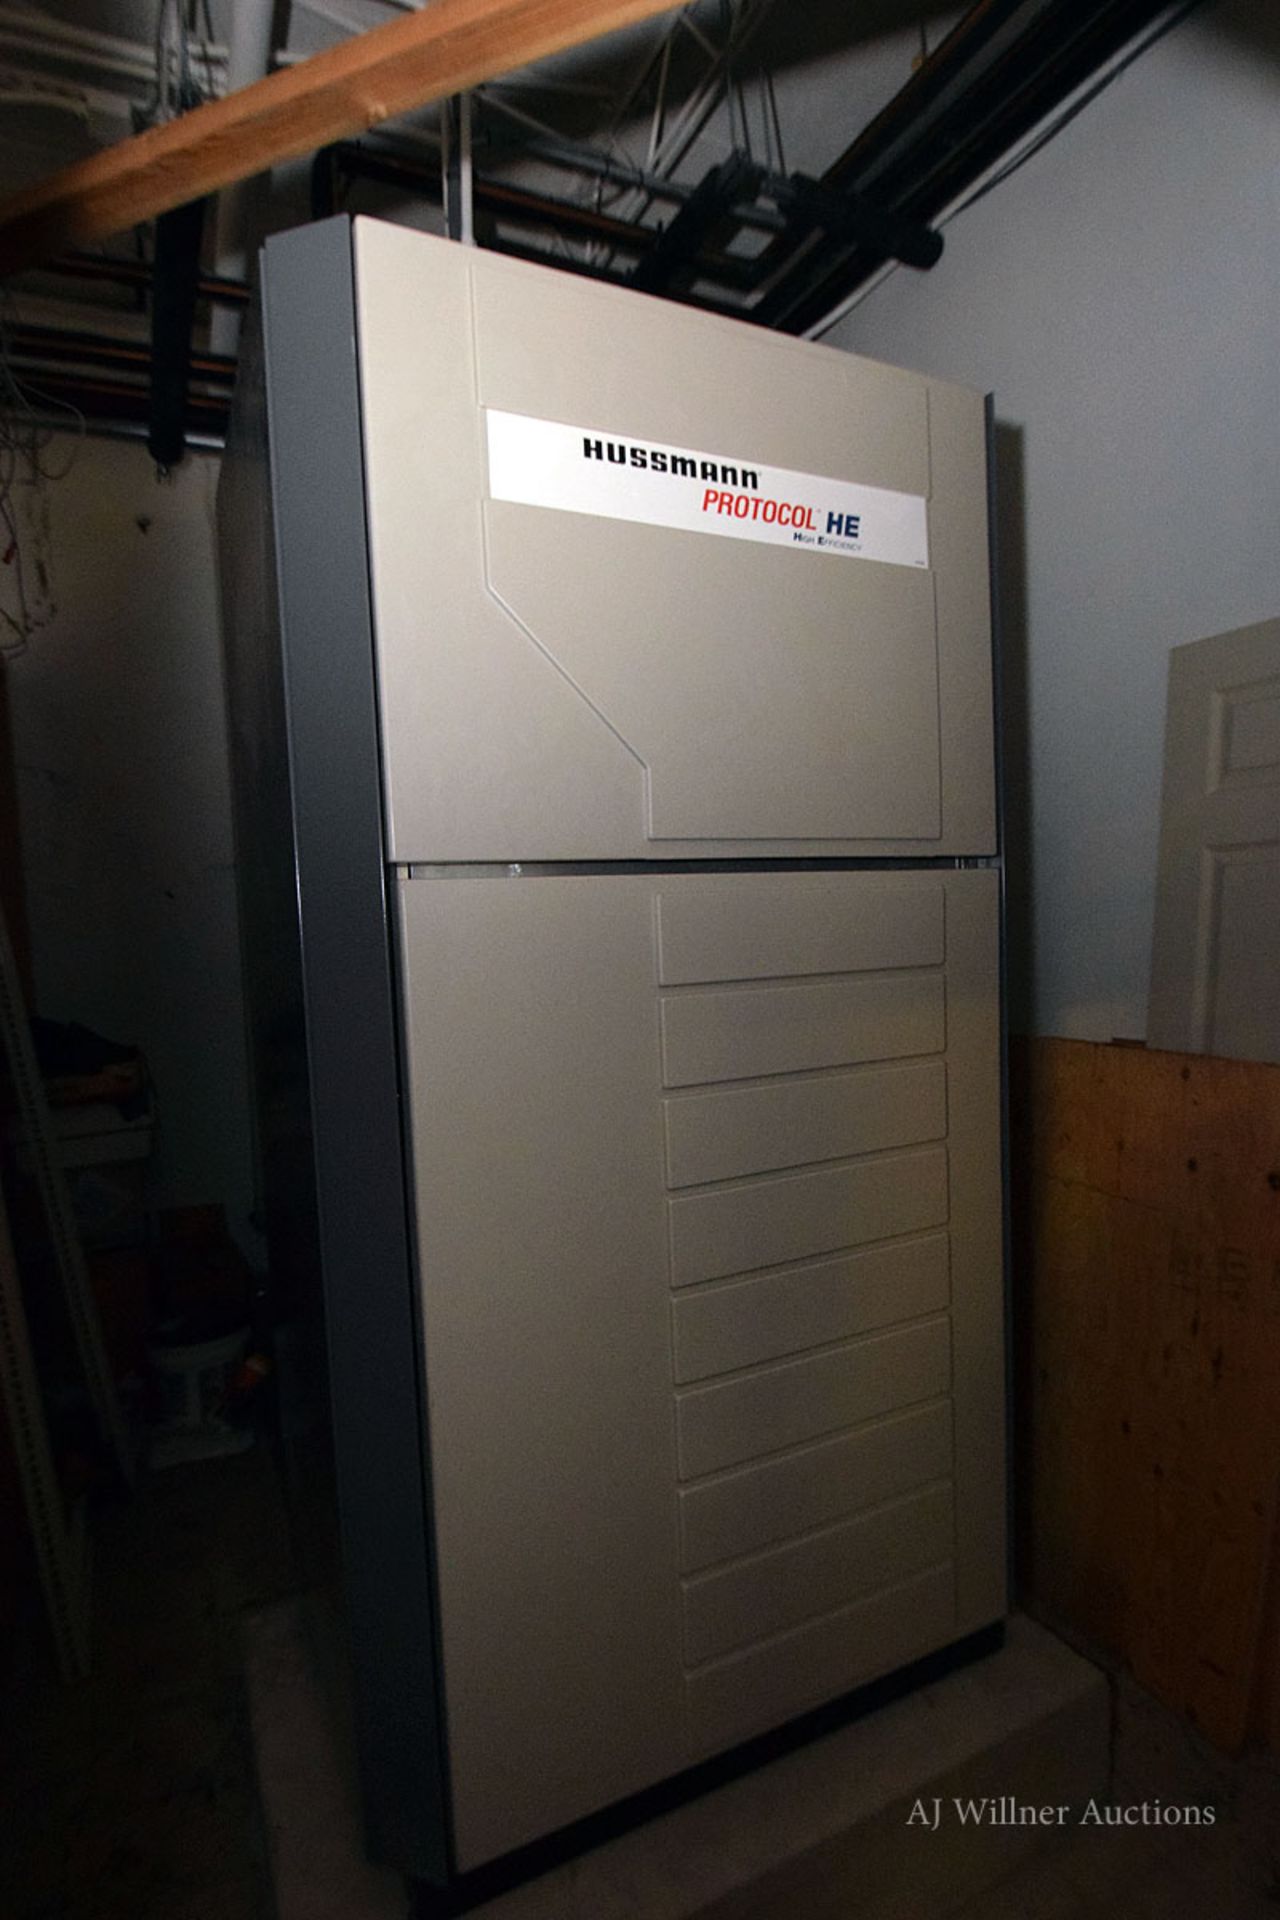 Hussman Protocol HE (High Efficiency) Refrigeration System